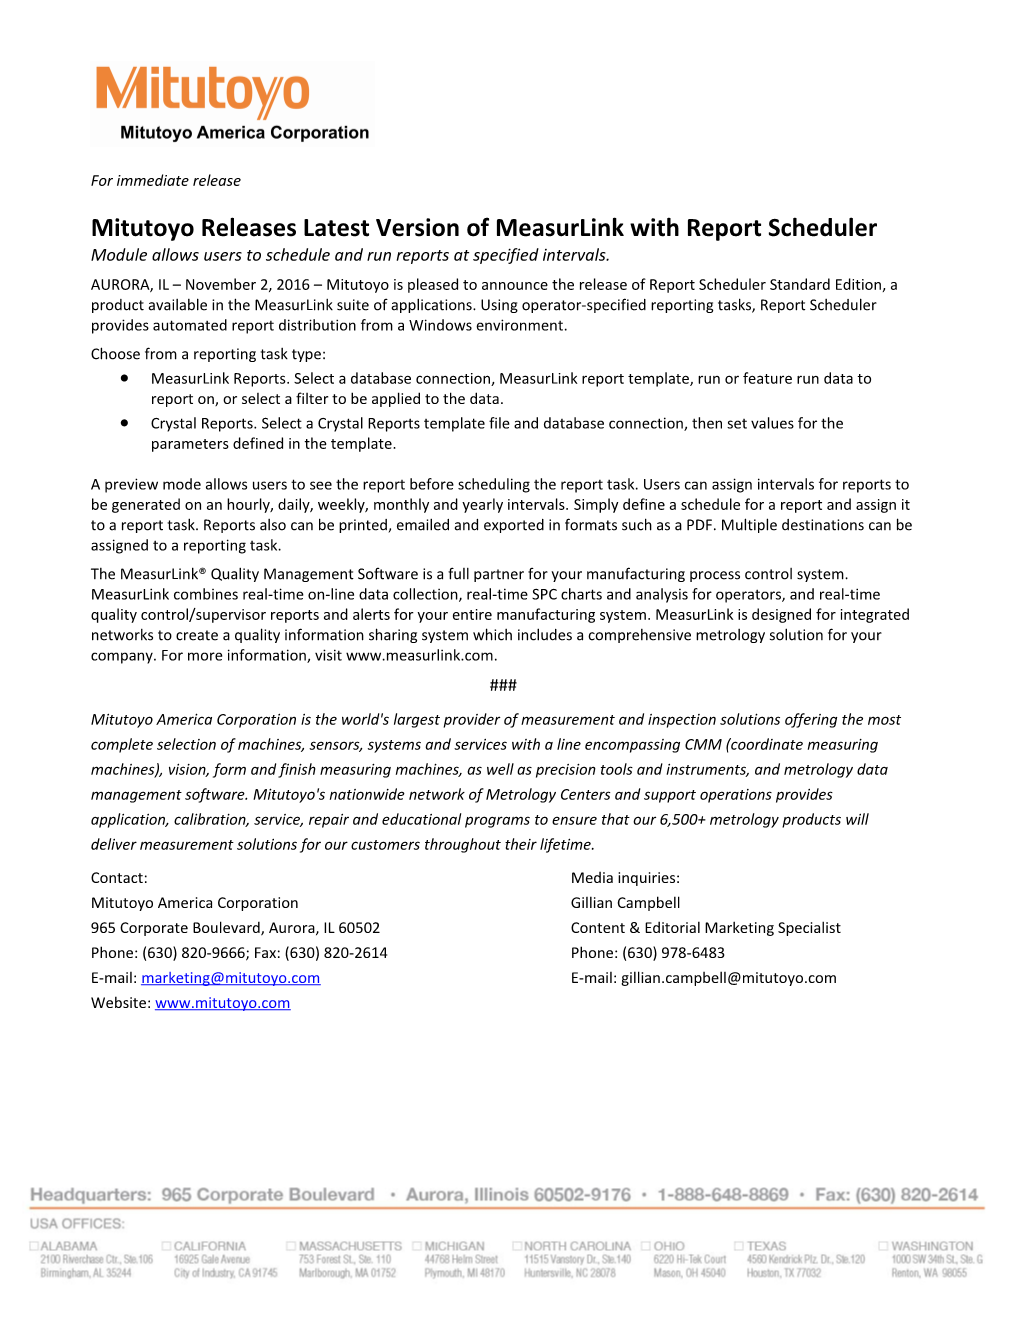 Mitutoyo Releases Latest Version of Measurlink with Report Scheduler